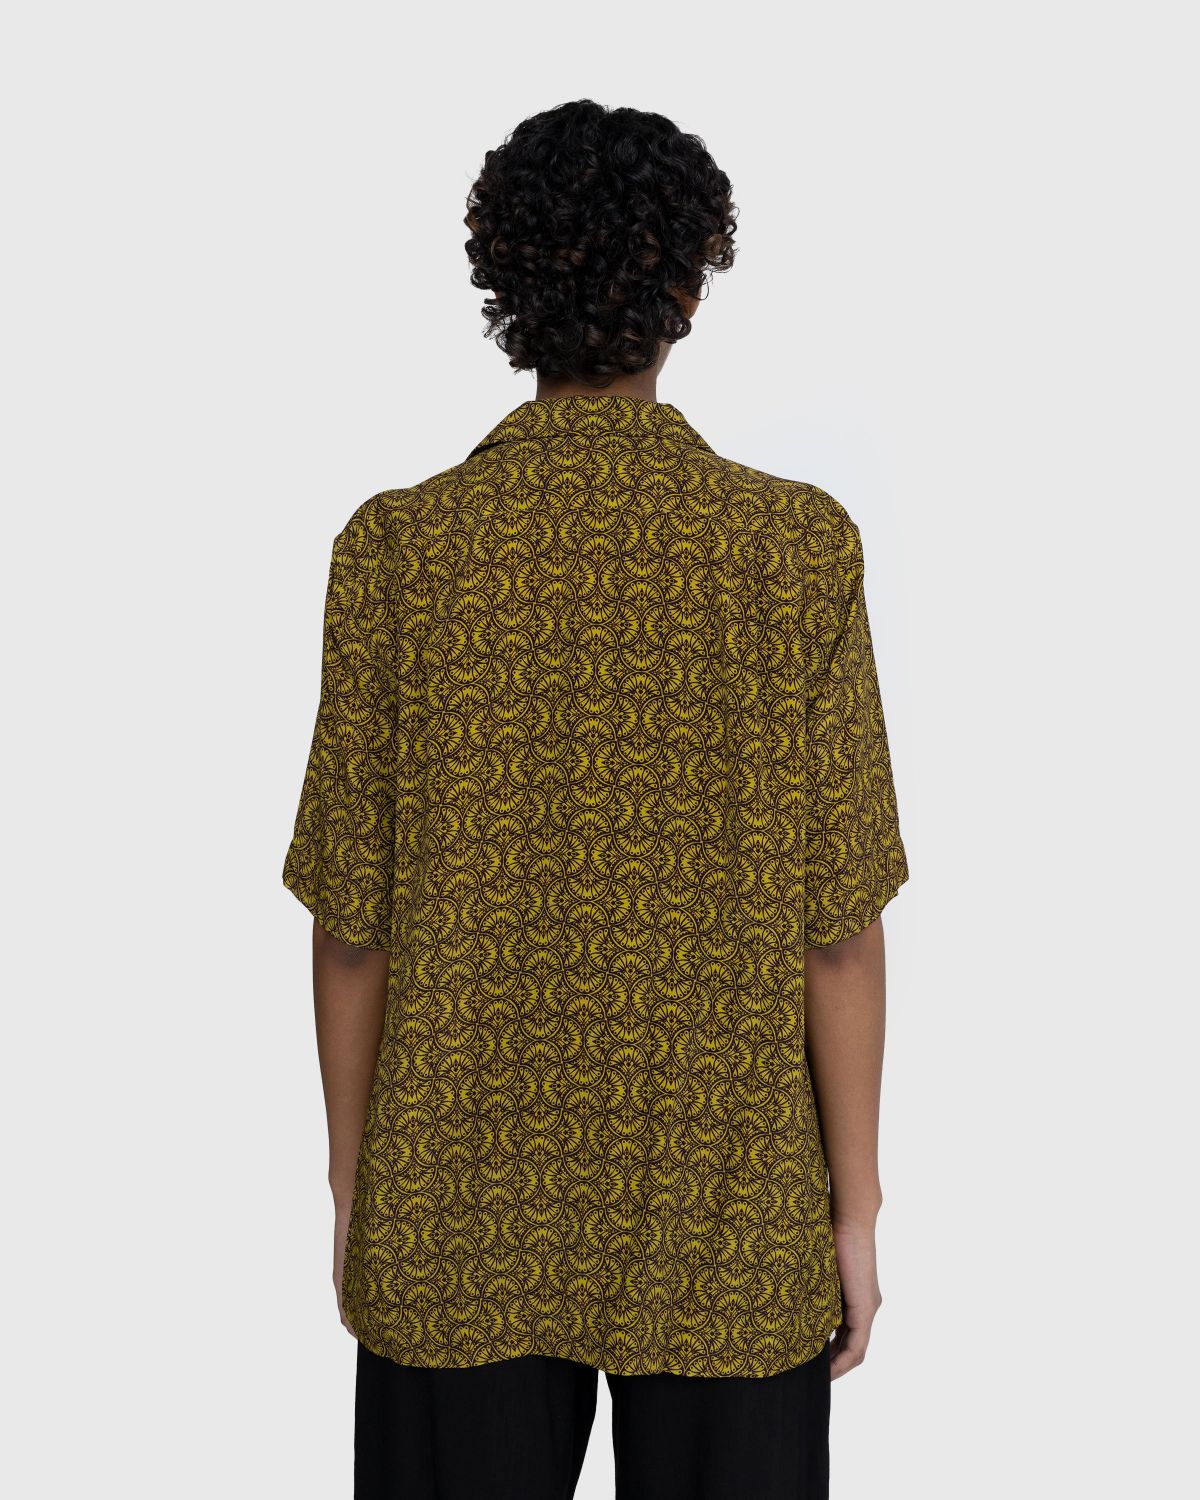 Dries van Noten – Carltone Shirt Yellow - Shortsleeve Shirts - Yellow - Image 3